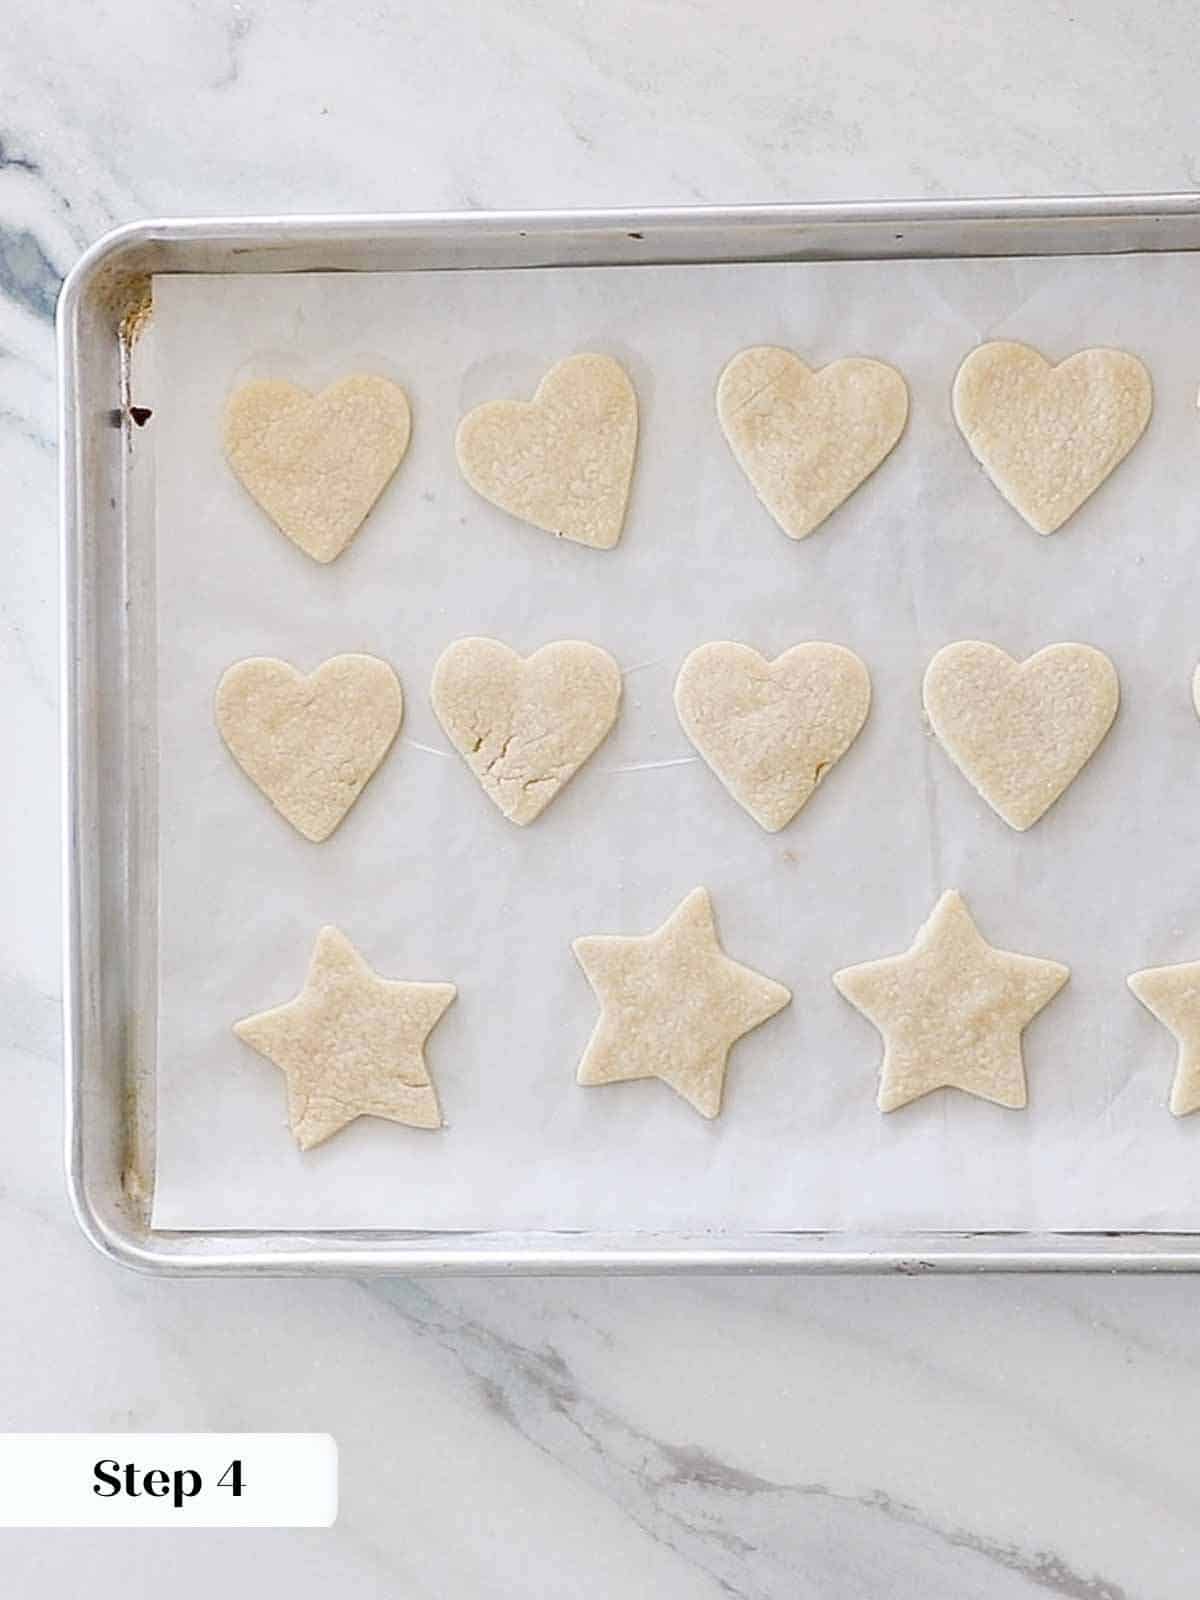 baked heart shaped sugar cookies on baking sheet.